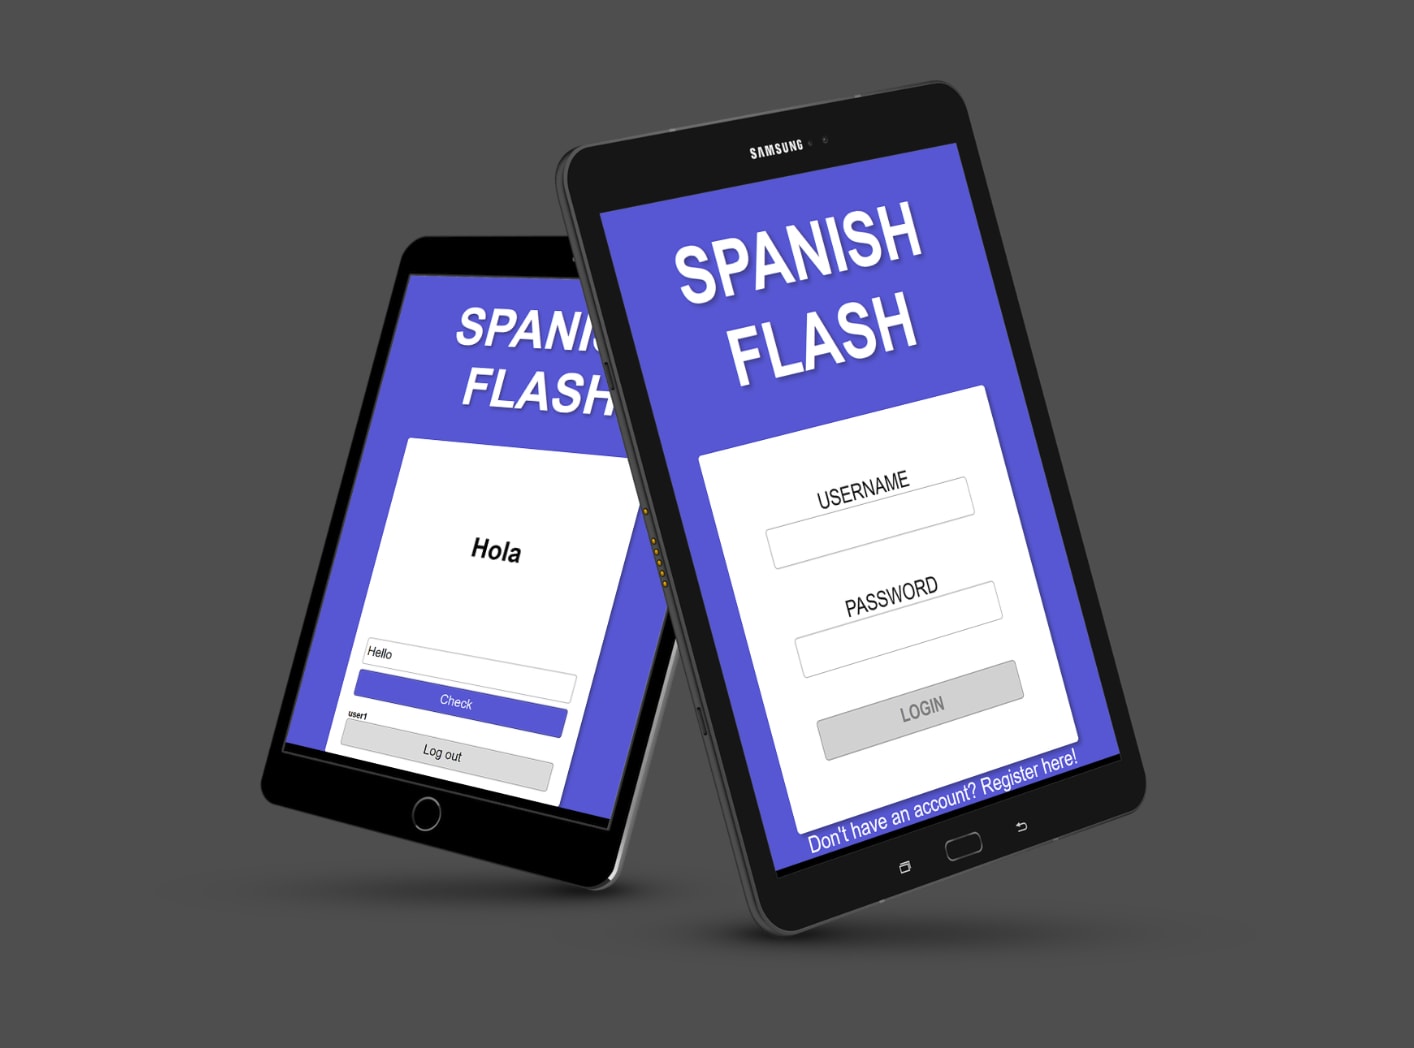 tablet images of Spanish Flash website